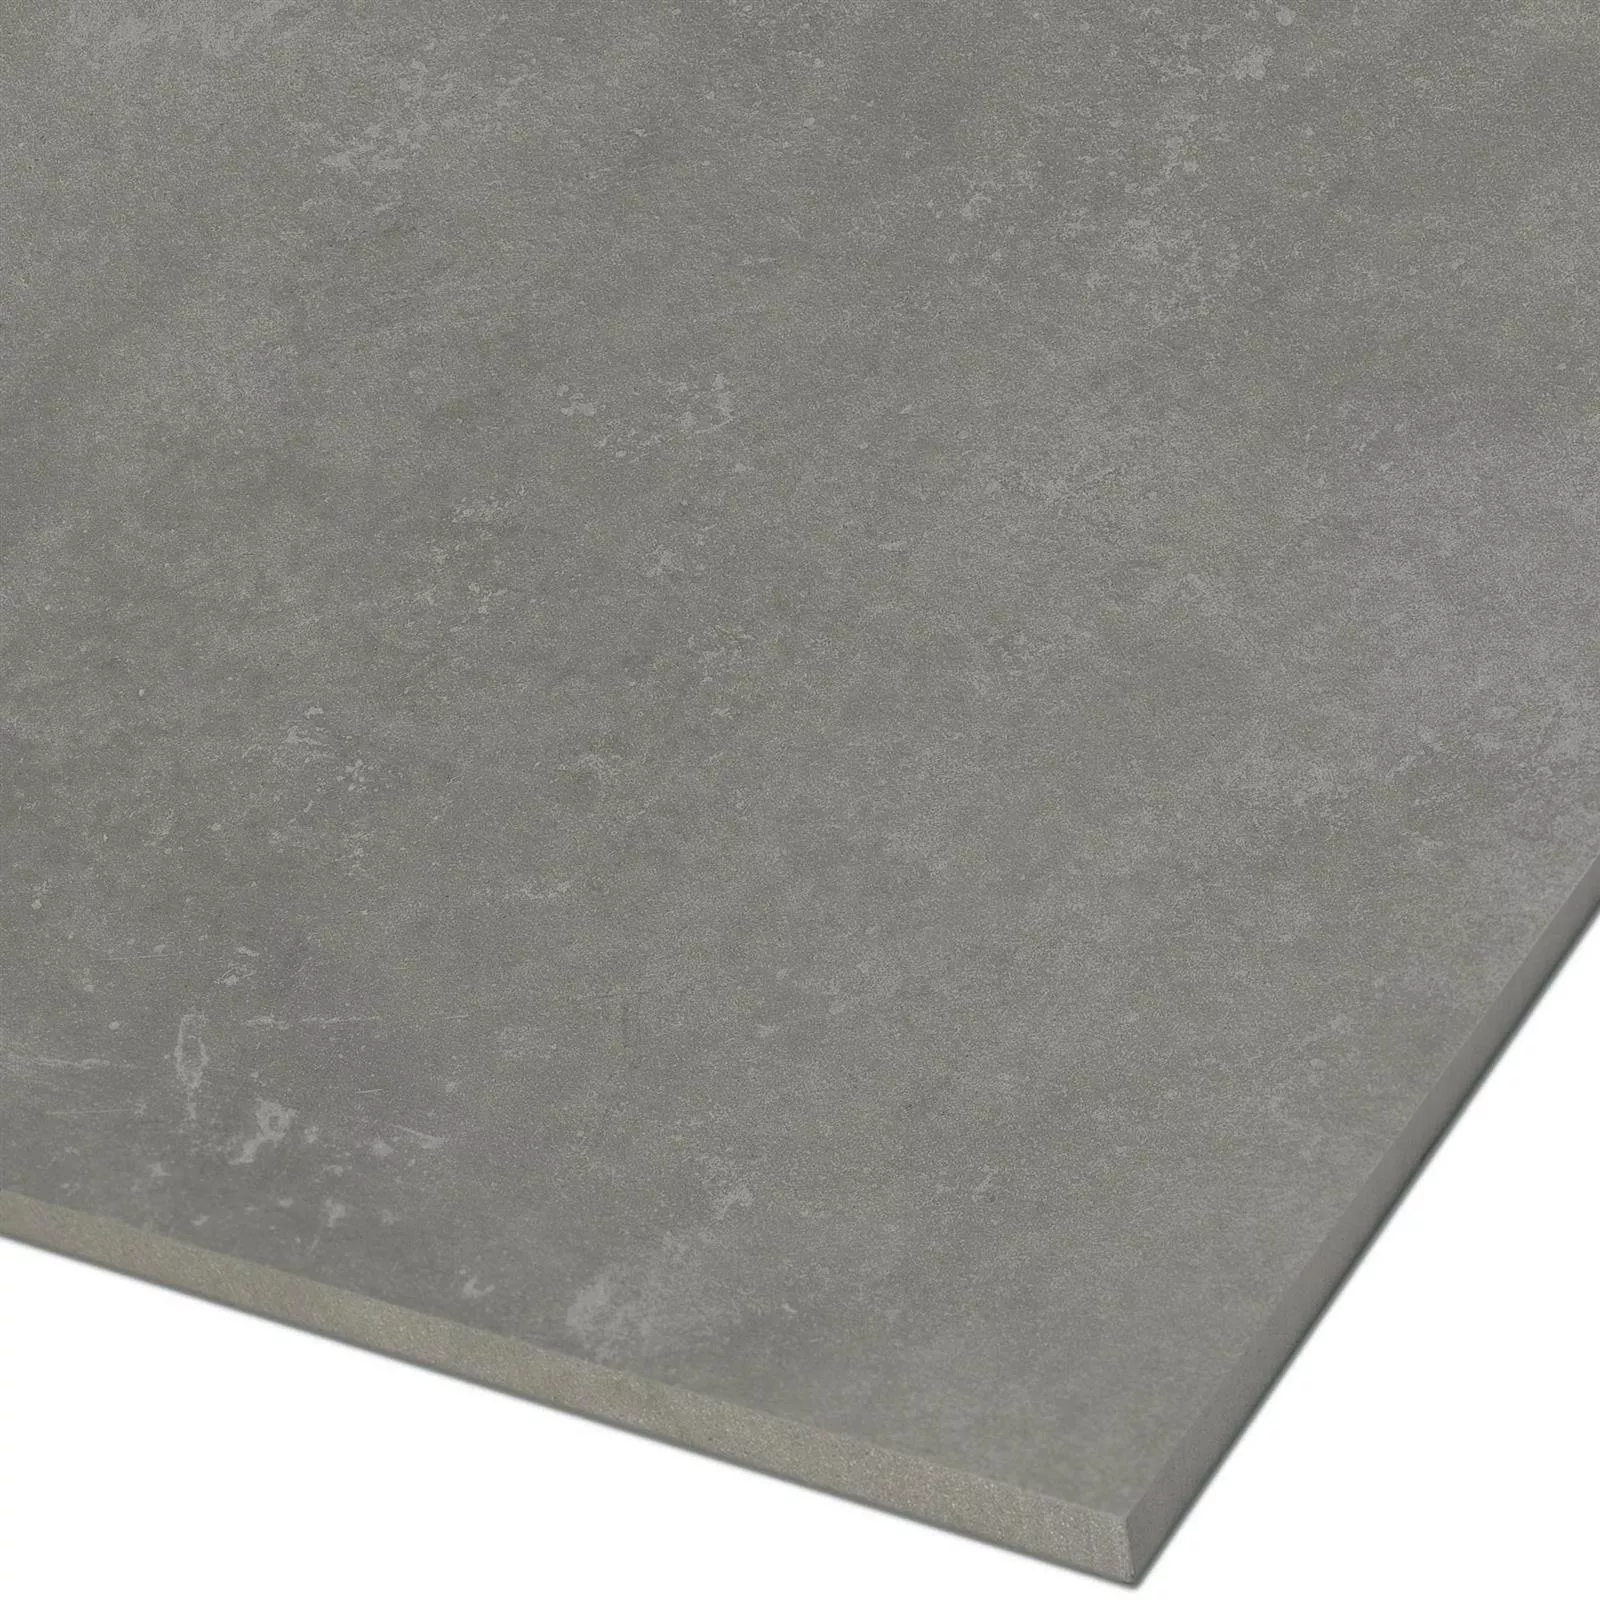 Sample Vloertegels Cement Optic Nepal Slim Grijs Beige 30x60cm